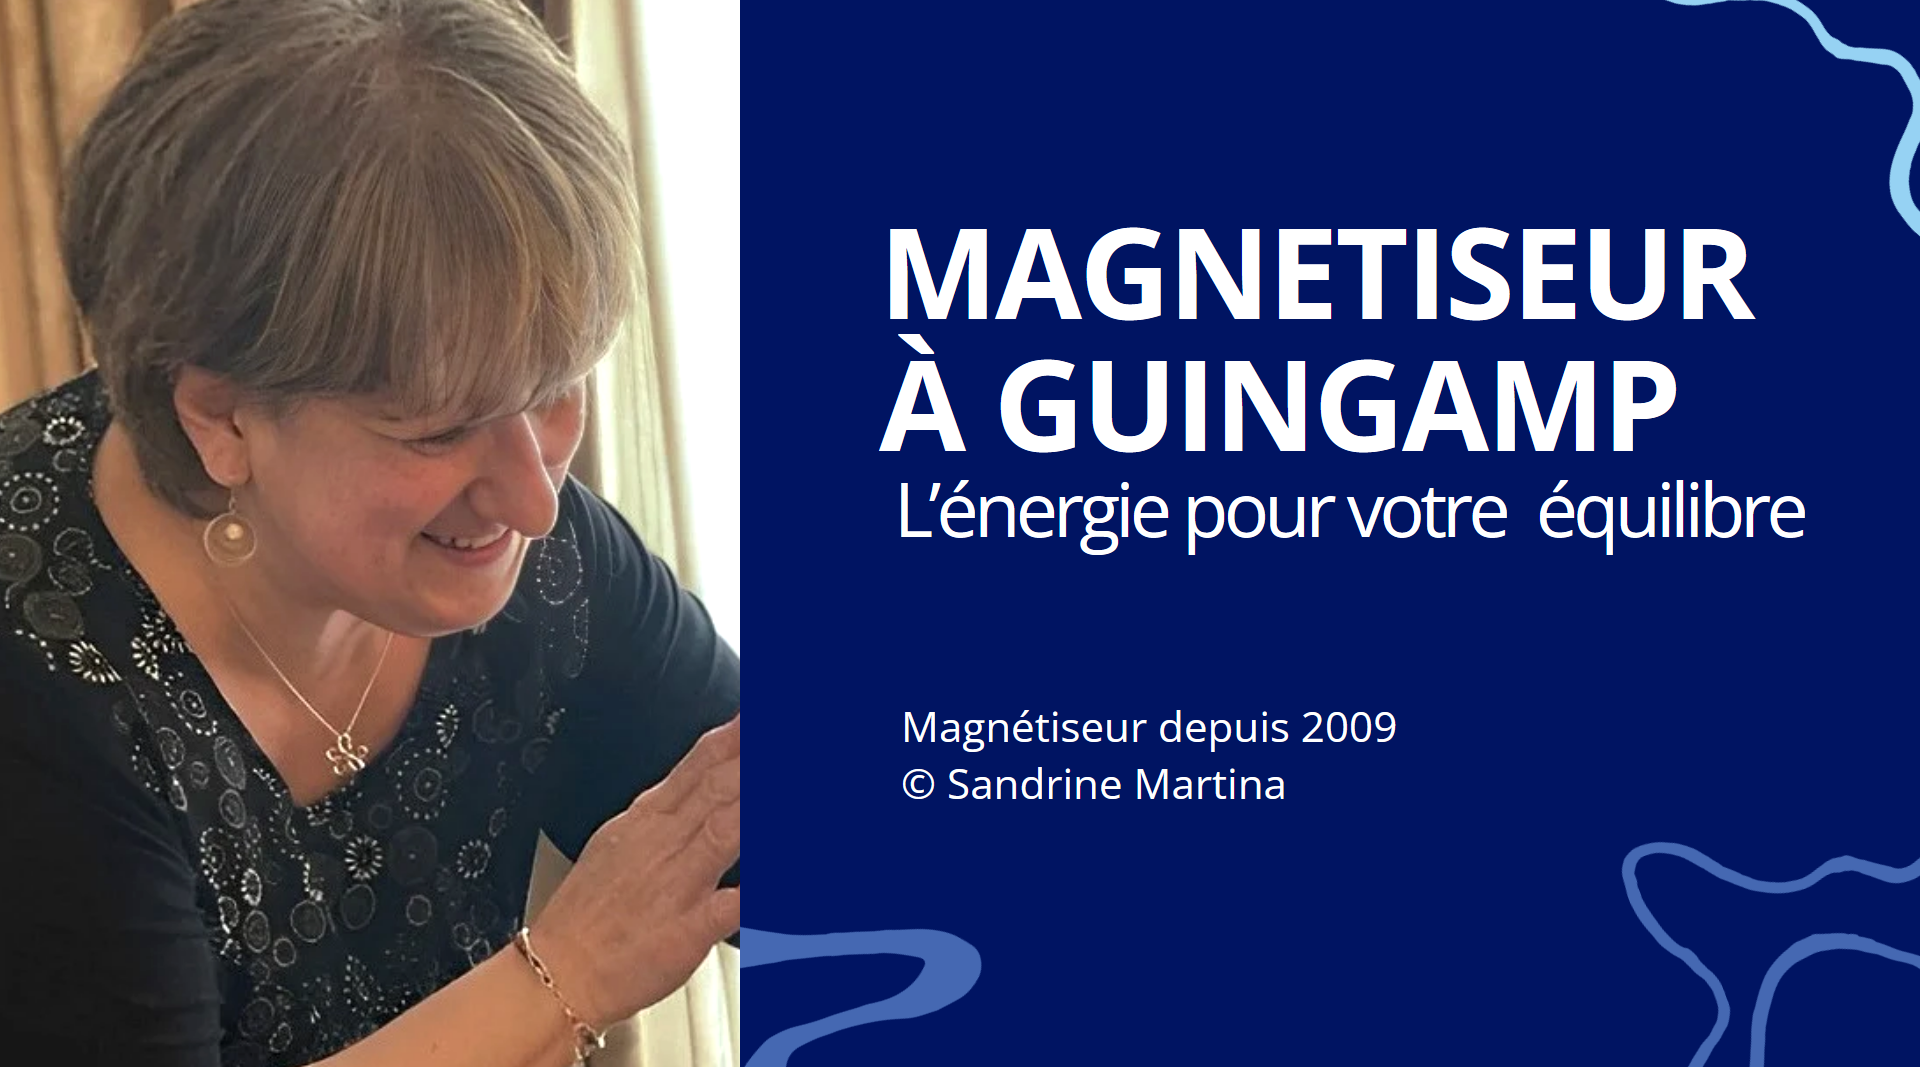 Magnetiseur guingmap retrouver equilibre magnetiseur experimente sandrine martina 10